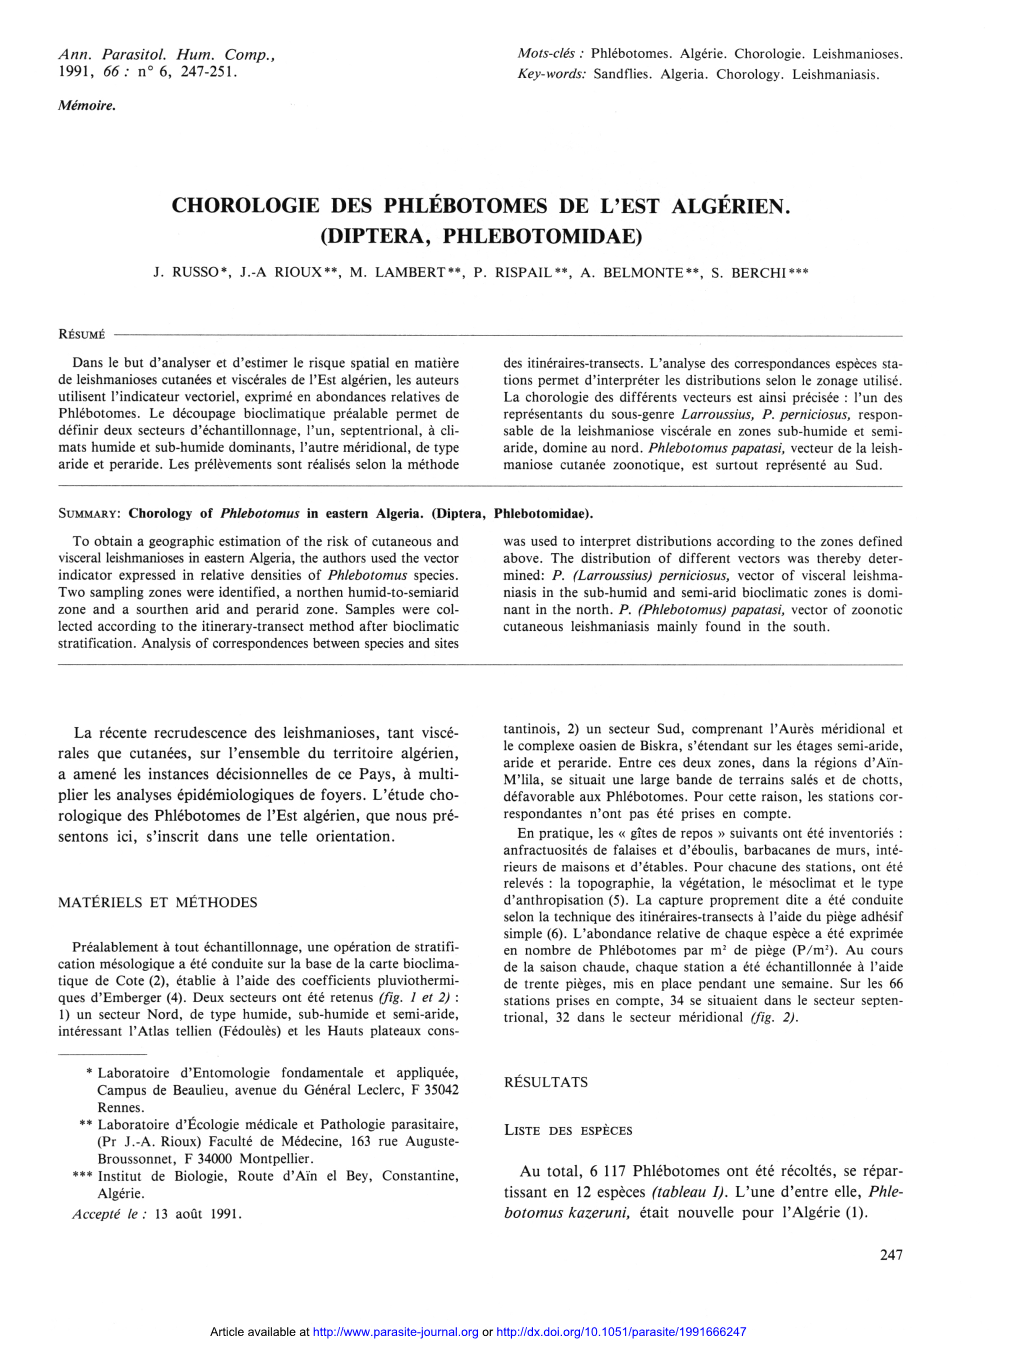 Chorologie Des Phlébotomes De L'est Algérien. (Diptera, Phlebotomidae) J